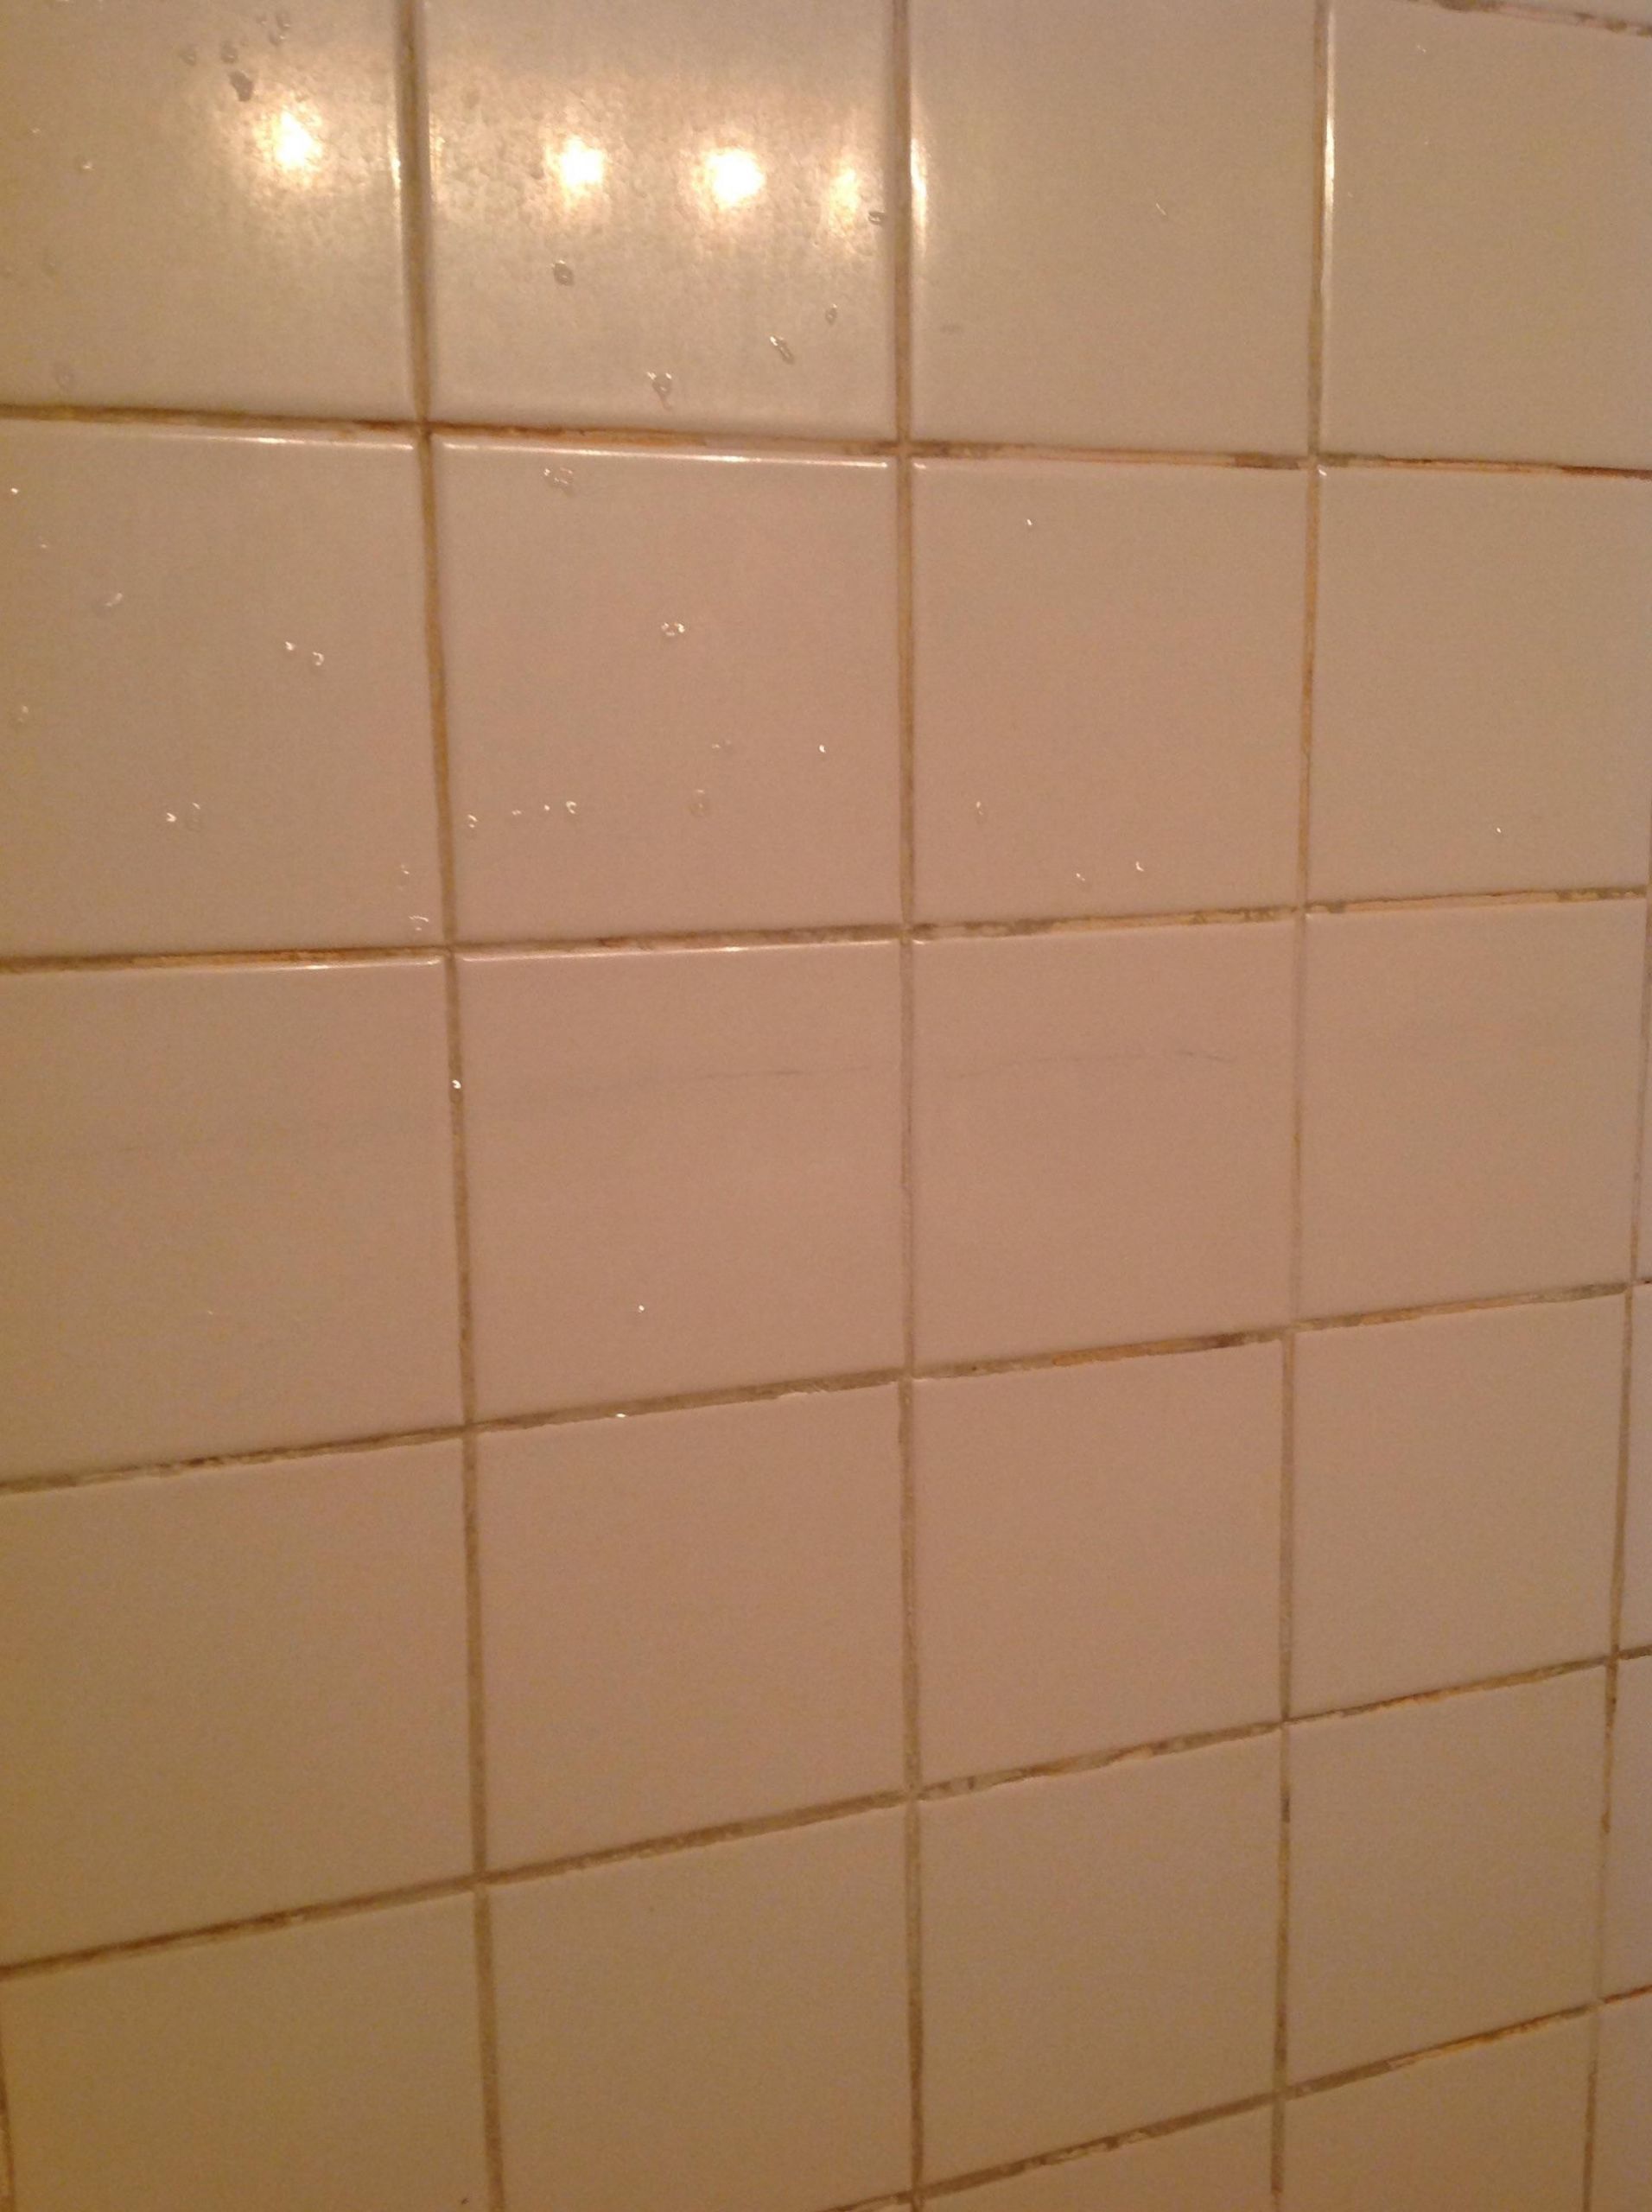 Repairing Bathroom Tiles
 repair Cracked bathroom tile runs almost entire length